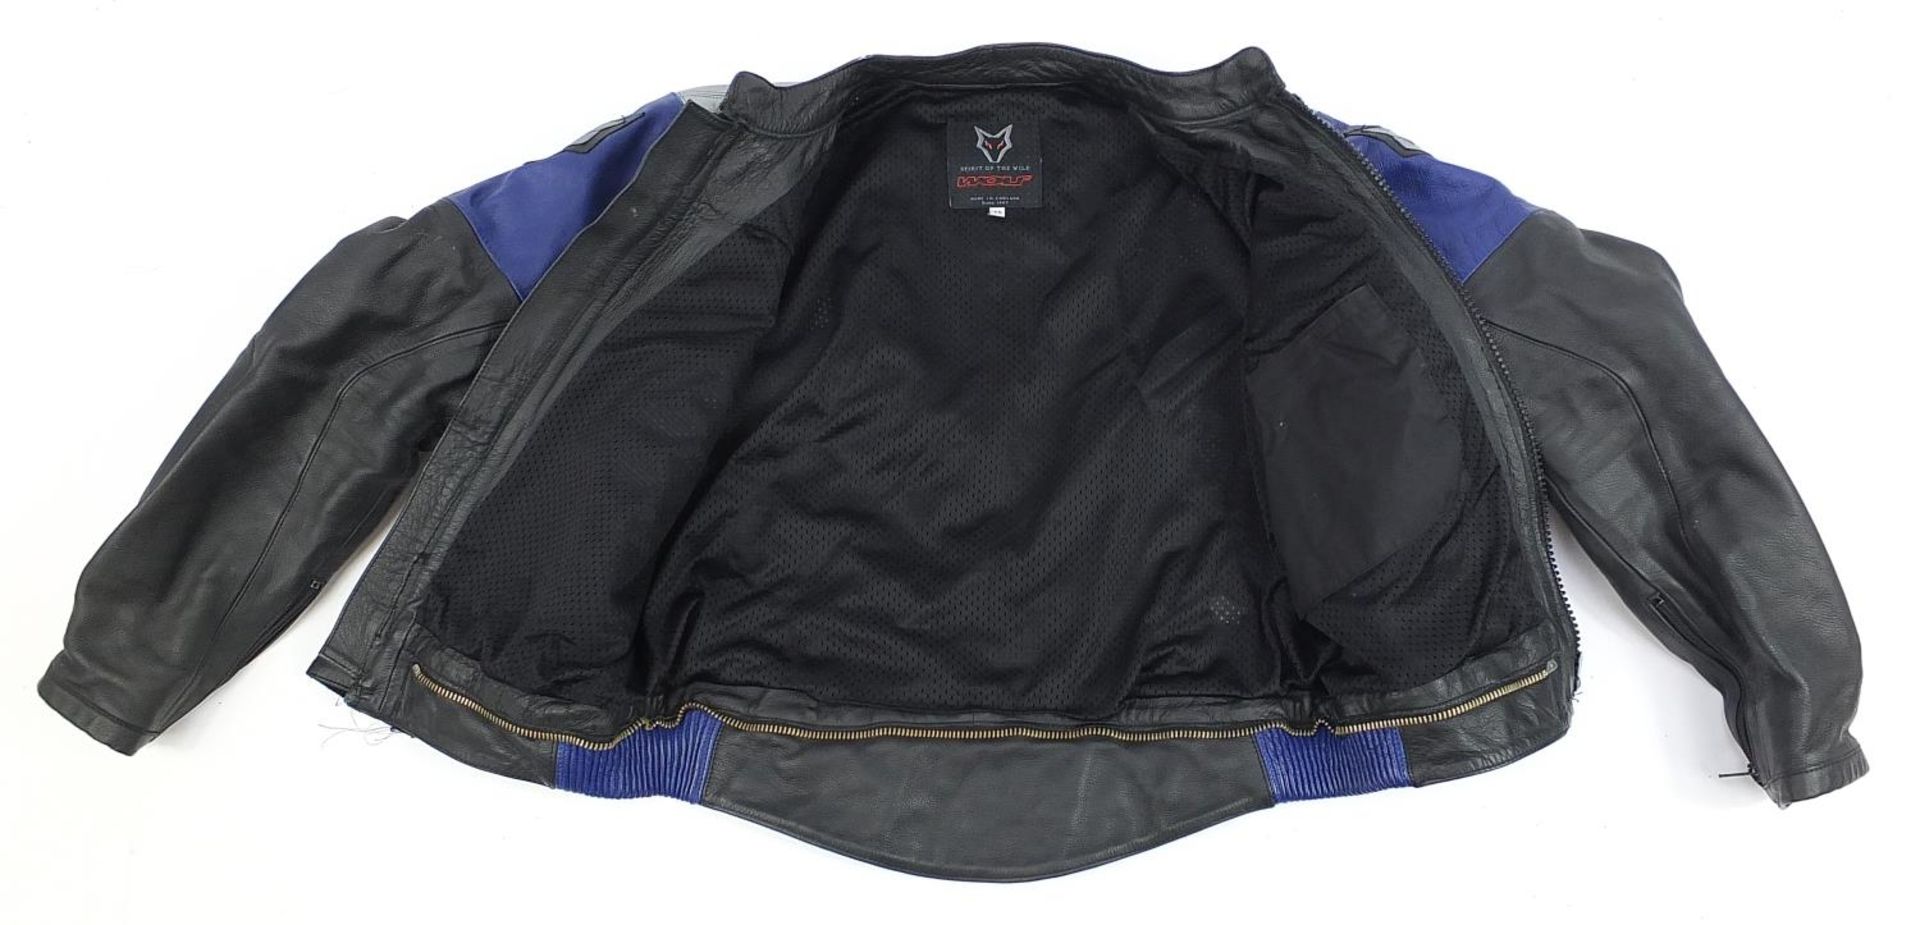 Wolf, Spirit of the Wild leather motorcycle jacket, size 46 - Image 2 of 4